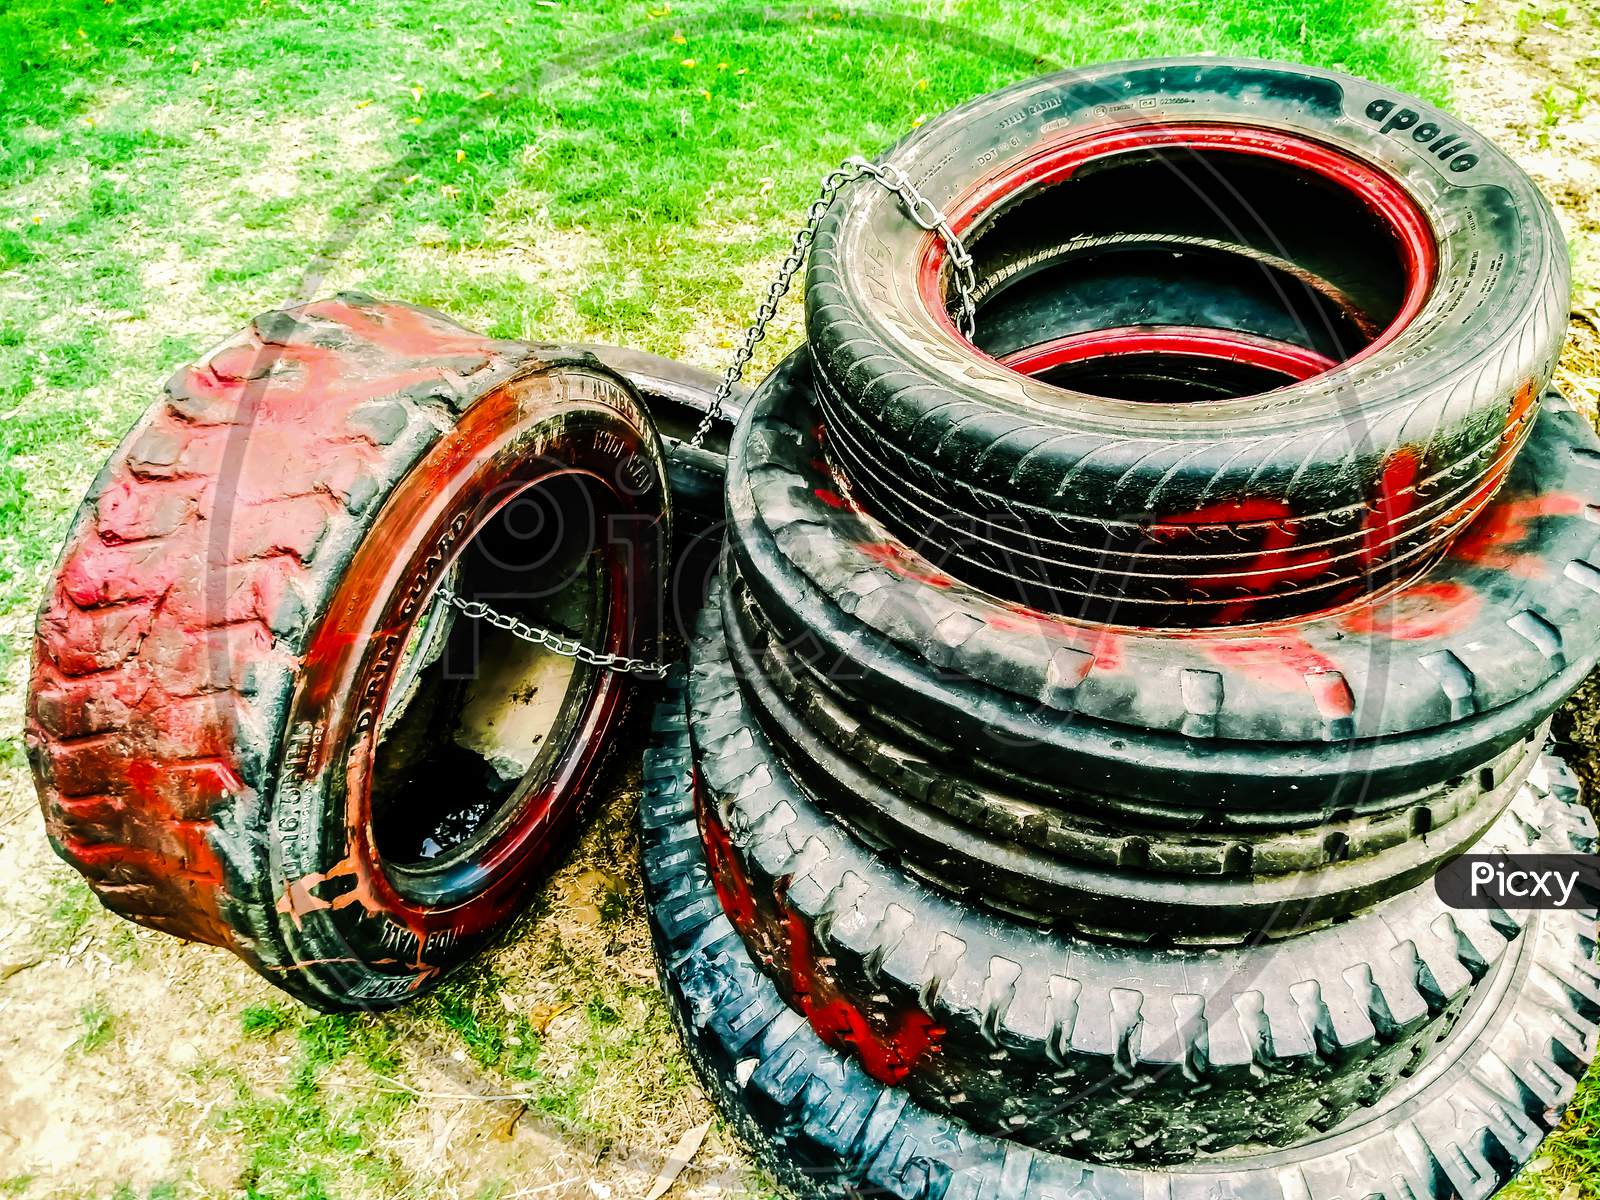 Rubber Tyres in an lawn Garden